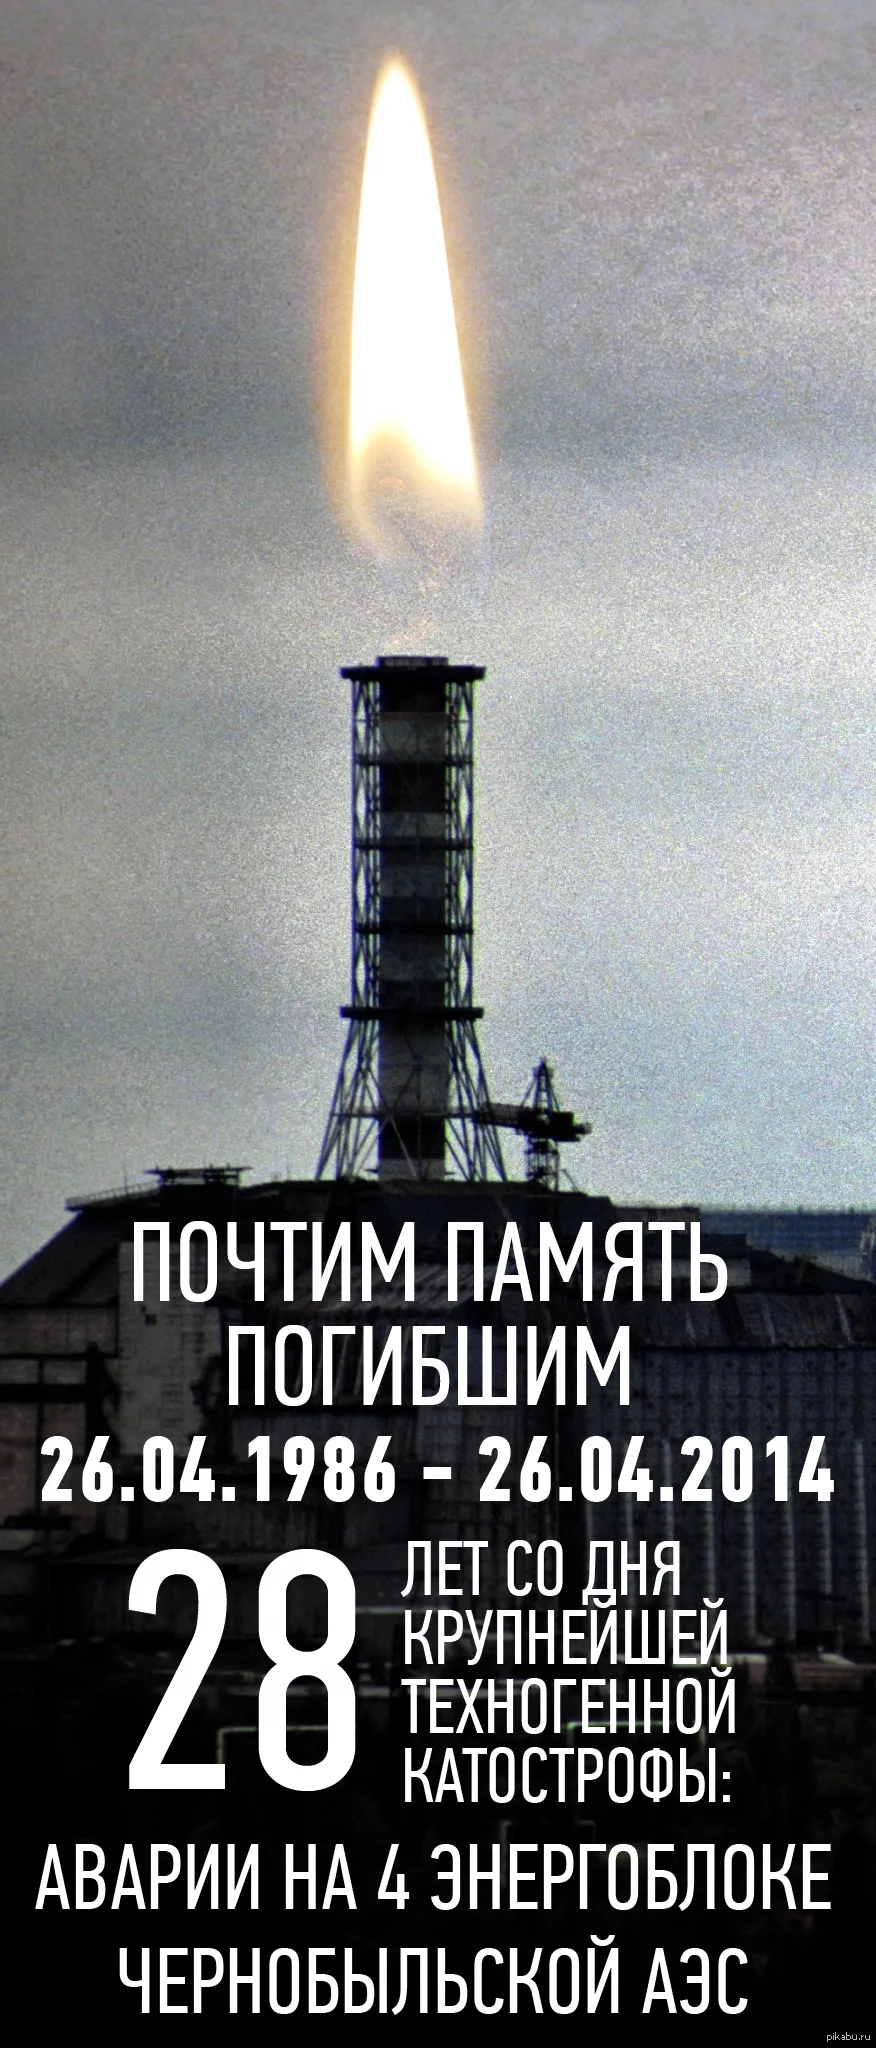 День памяти аэс. Чернобыльская АЭС память. Чернобыльская АЭС 1986 26 апреля. 26 Апреля день памяти Чернобыльской трагедии. 26 Апреля ЧАЭС.